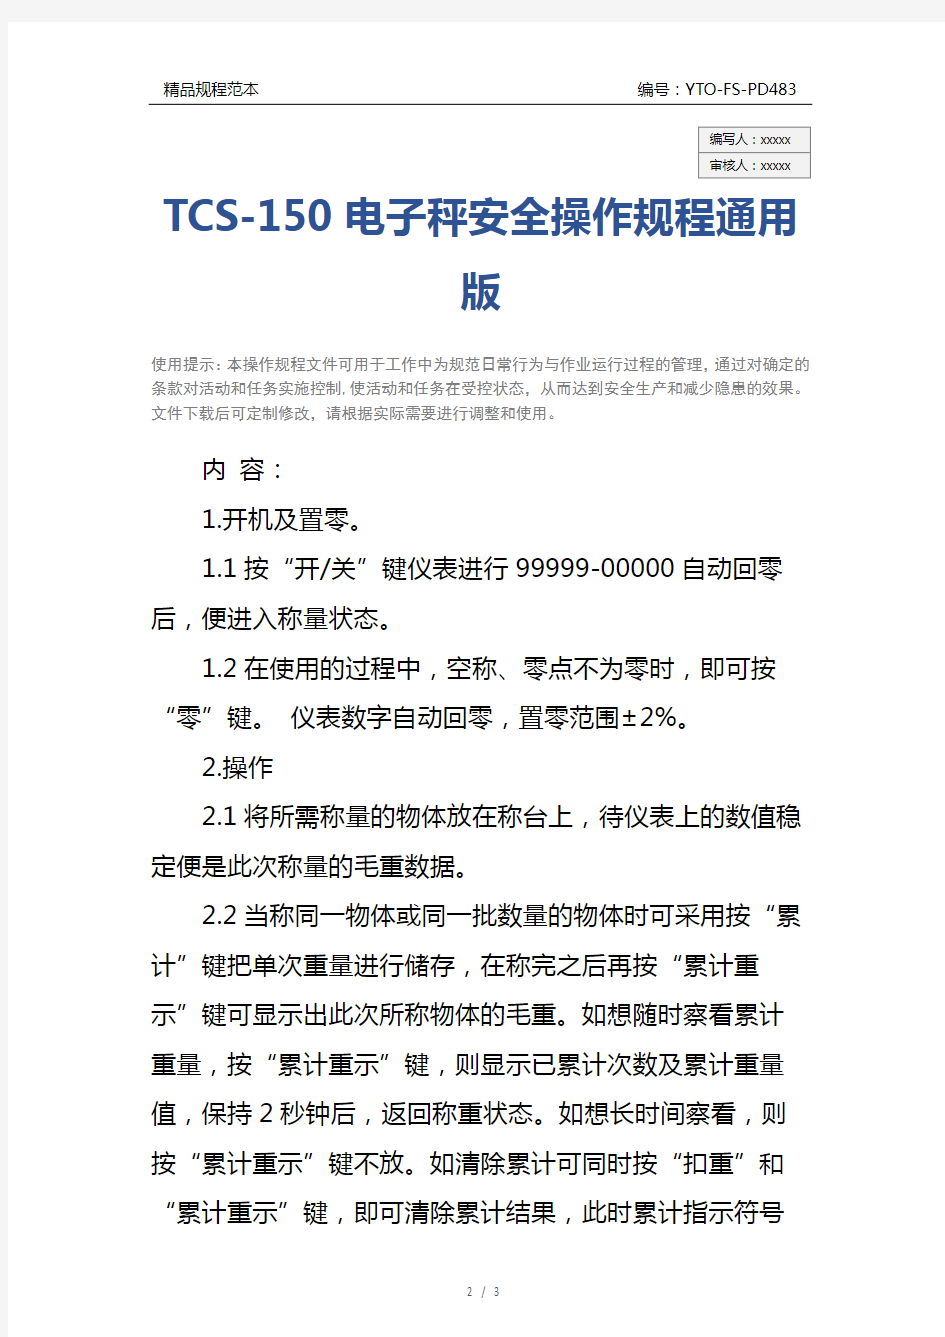 TCS-150电子秤安全操作规程通用版